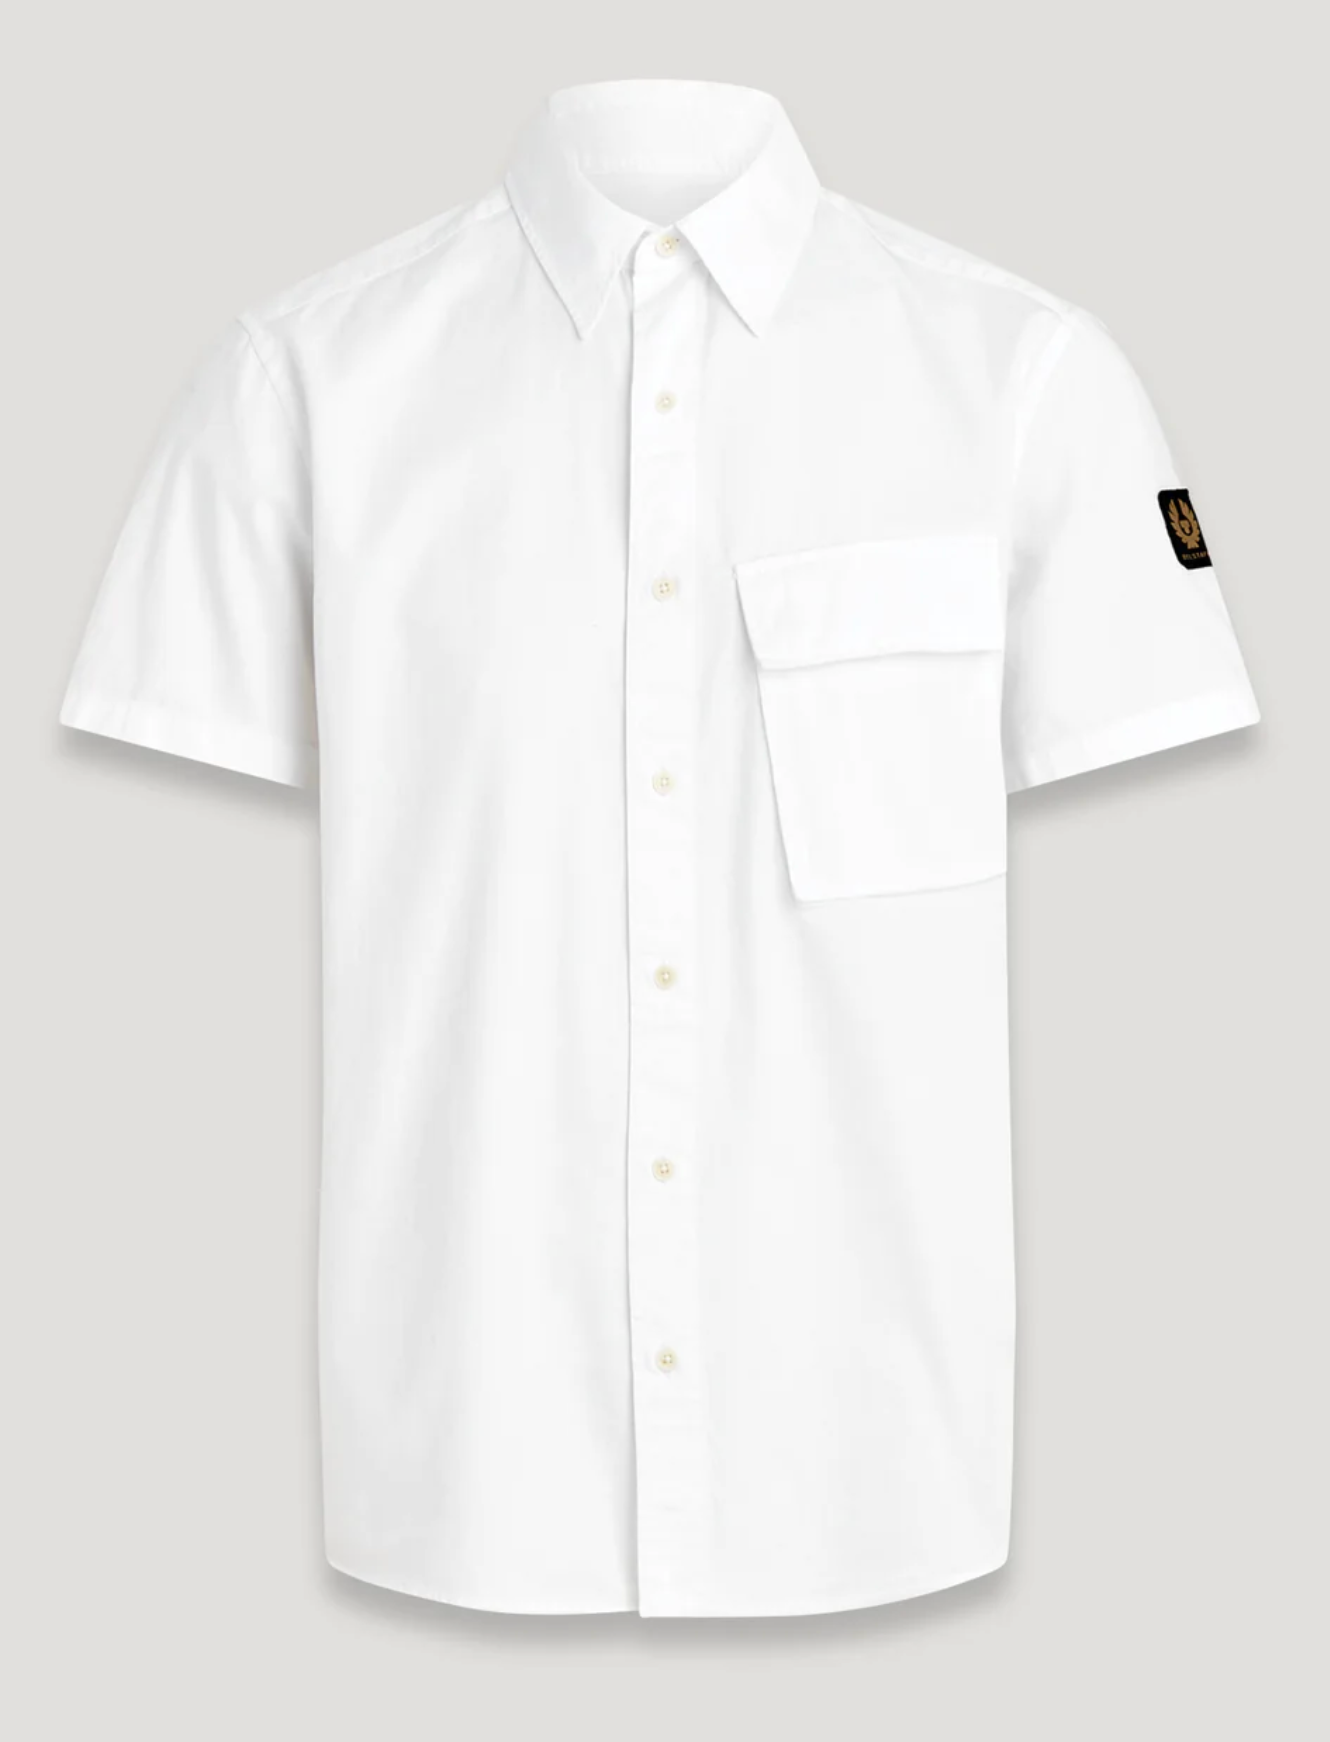 Belstaff "Scale" Short Sleeve Shirt White